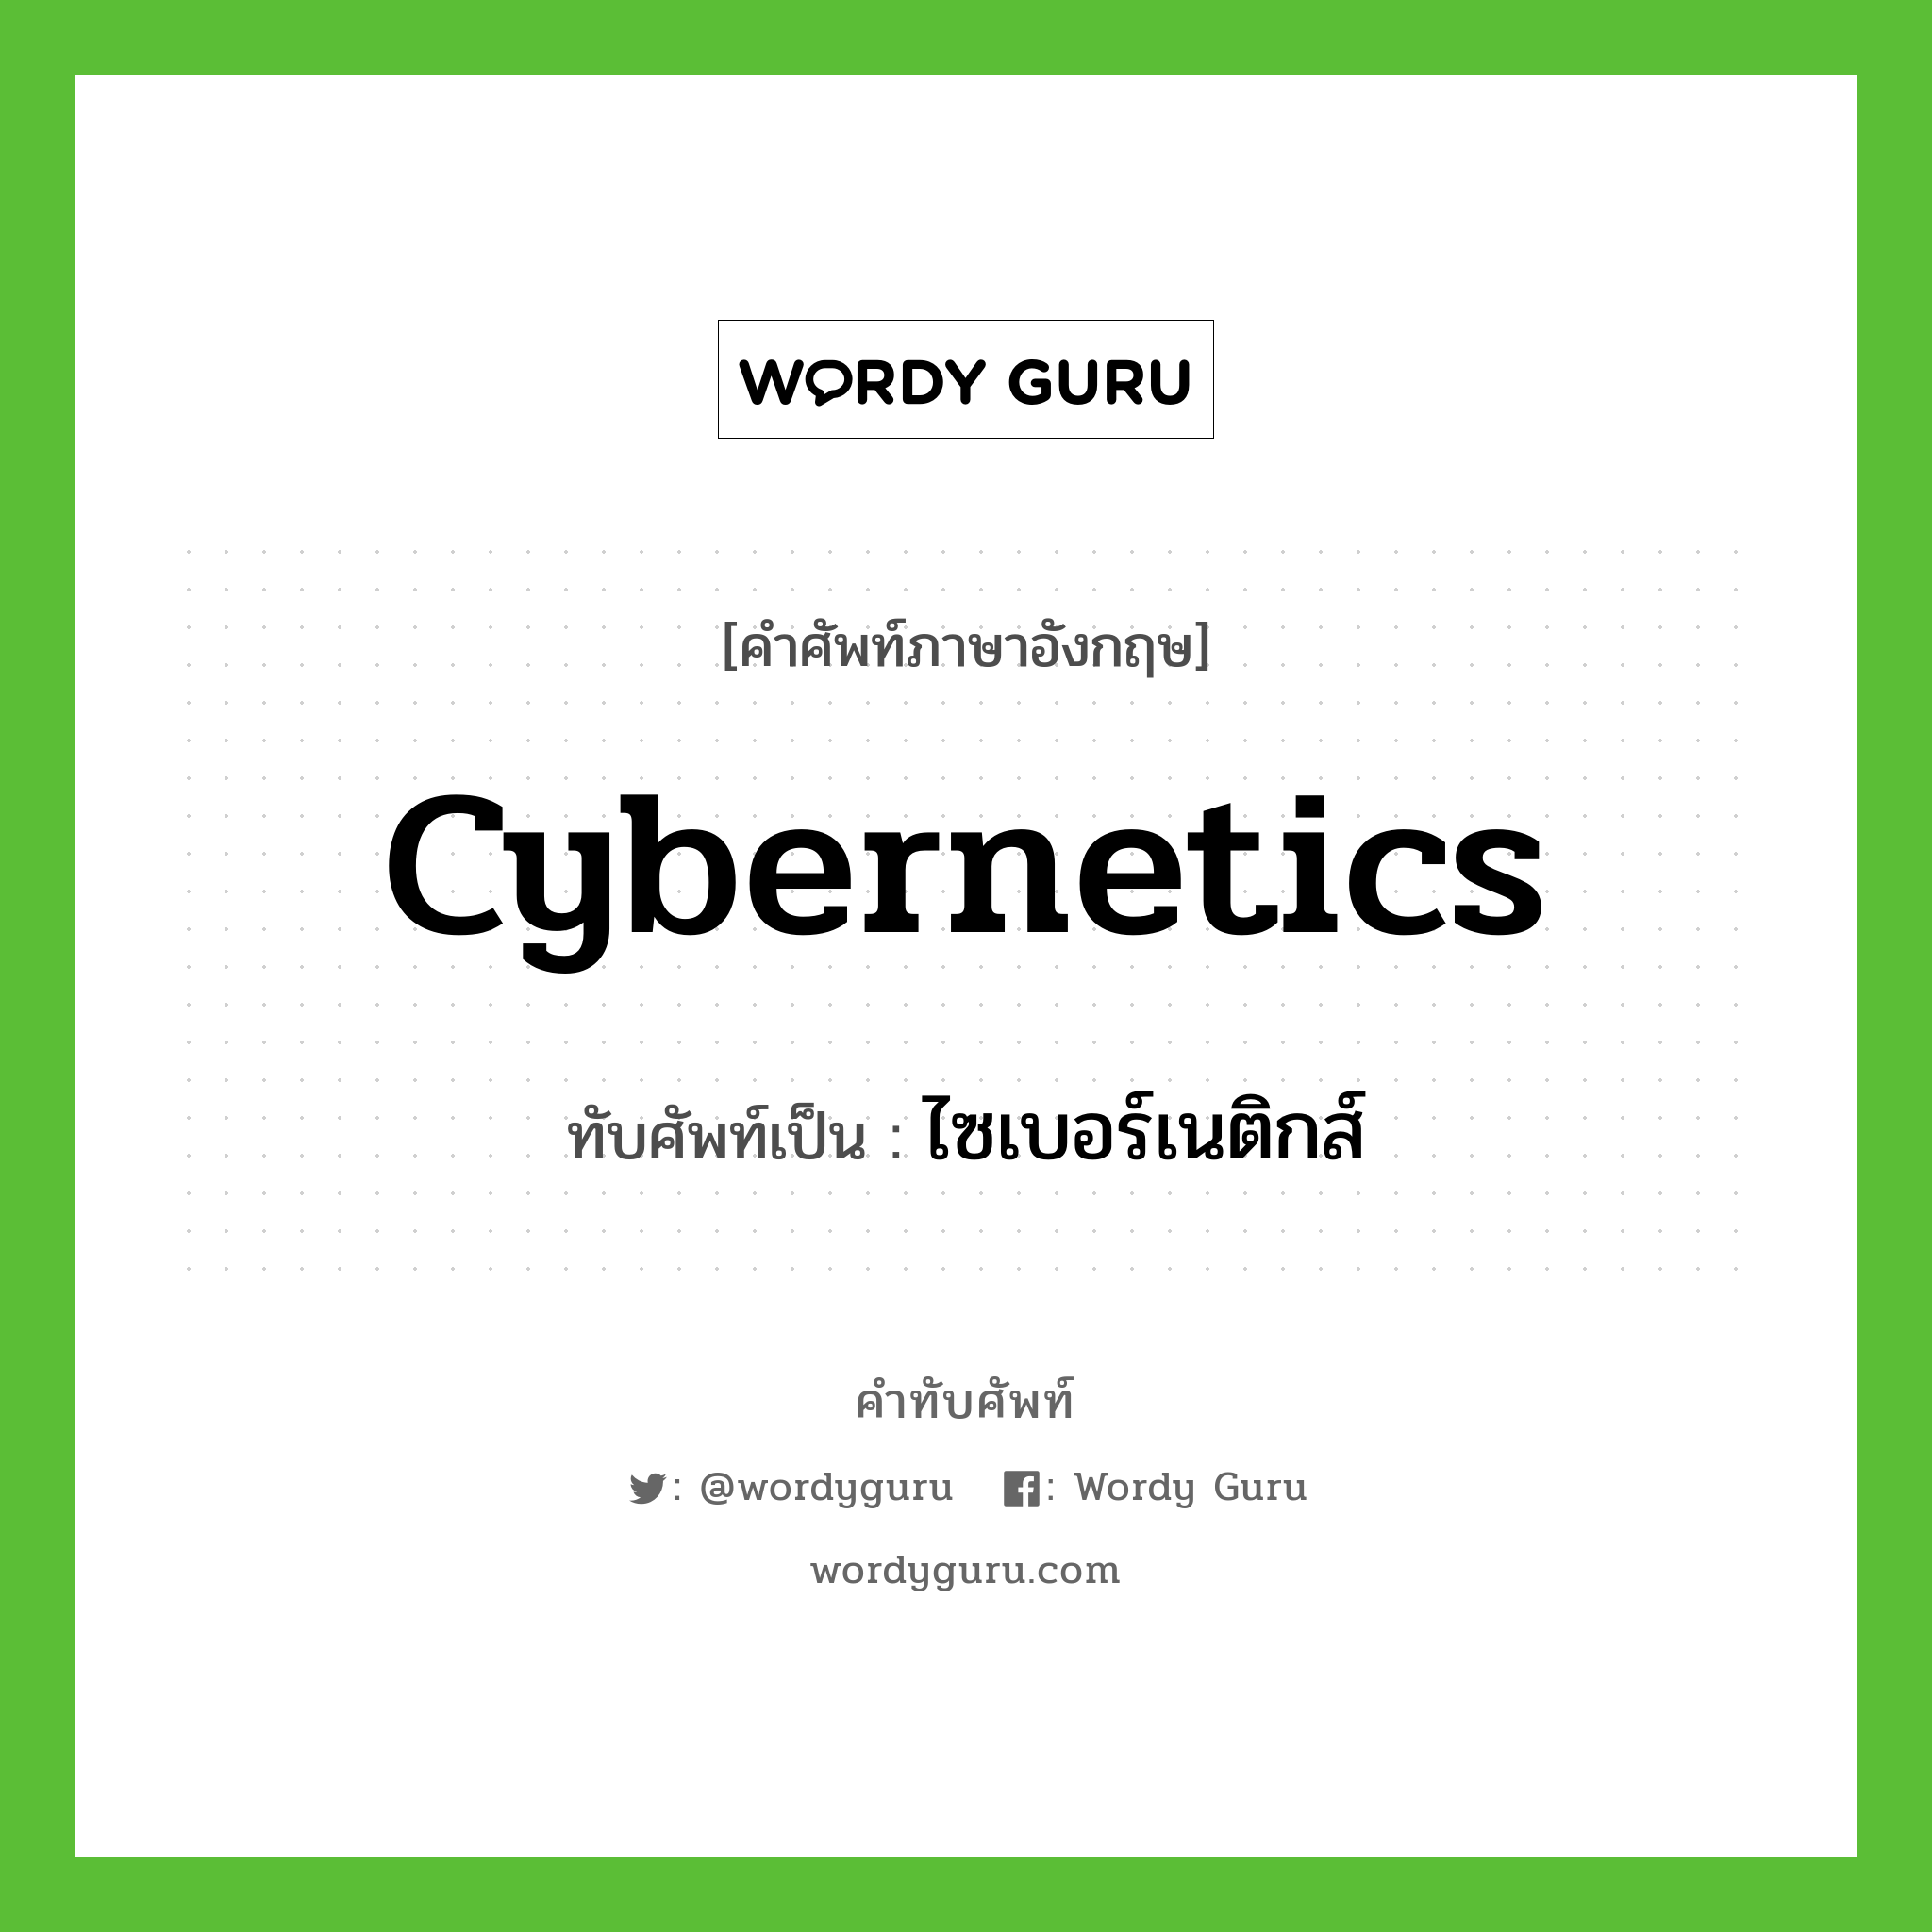 cybernetics เขียนเป็นคำไทยว่าอะไร?, คำศัพท์ภาษาอังกฤษ cybernetics ทับศัพท์เป็น ไซเบอร์เนติกส์